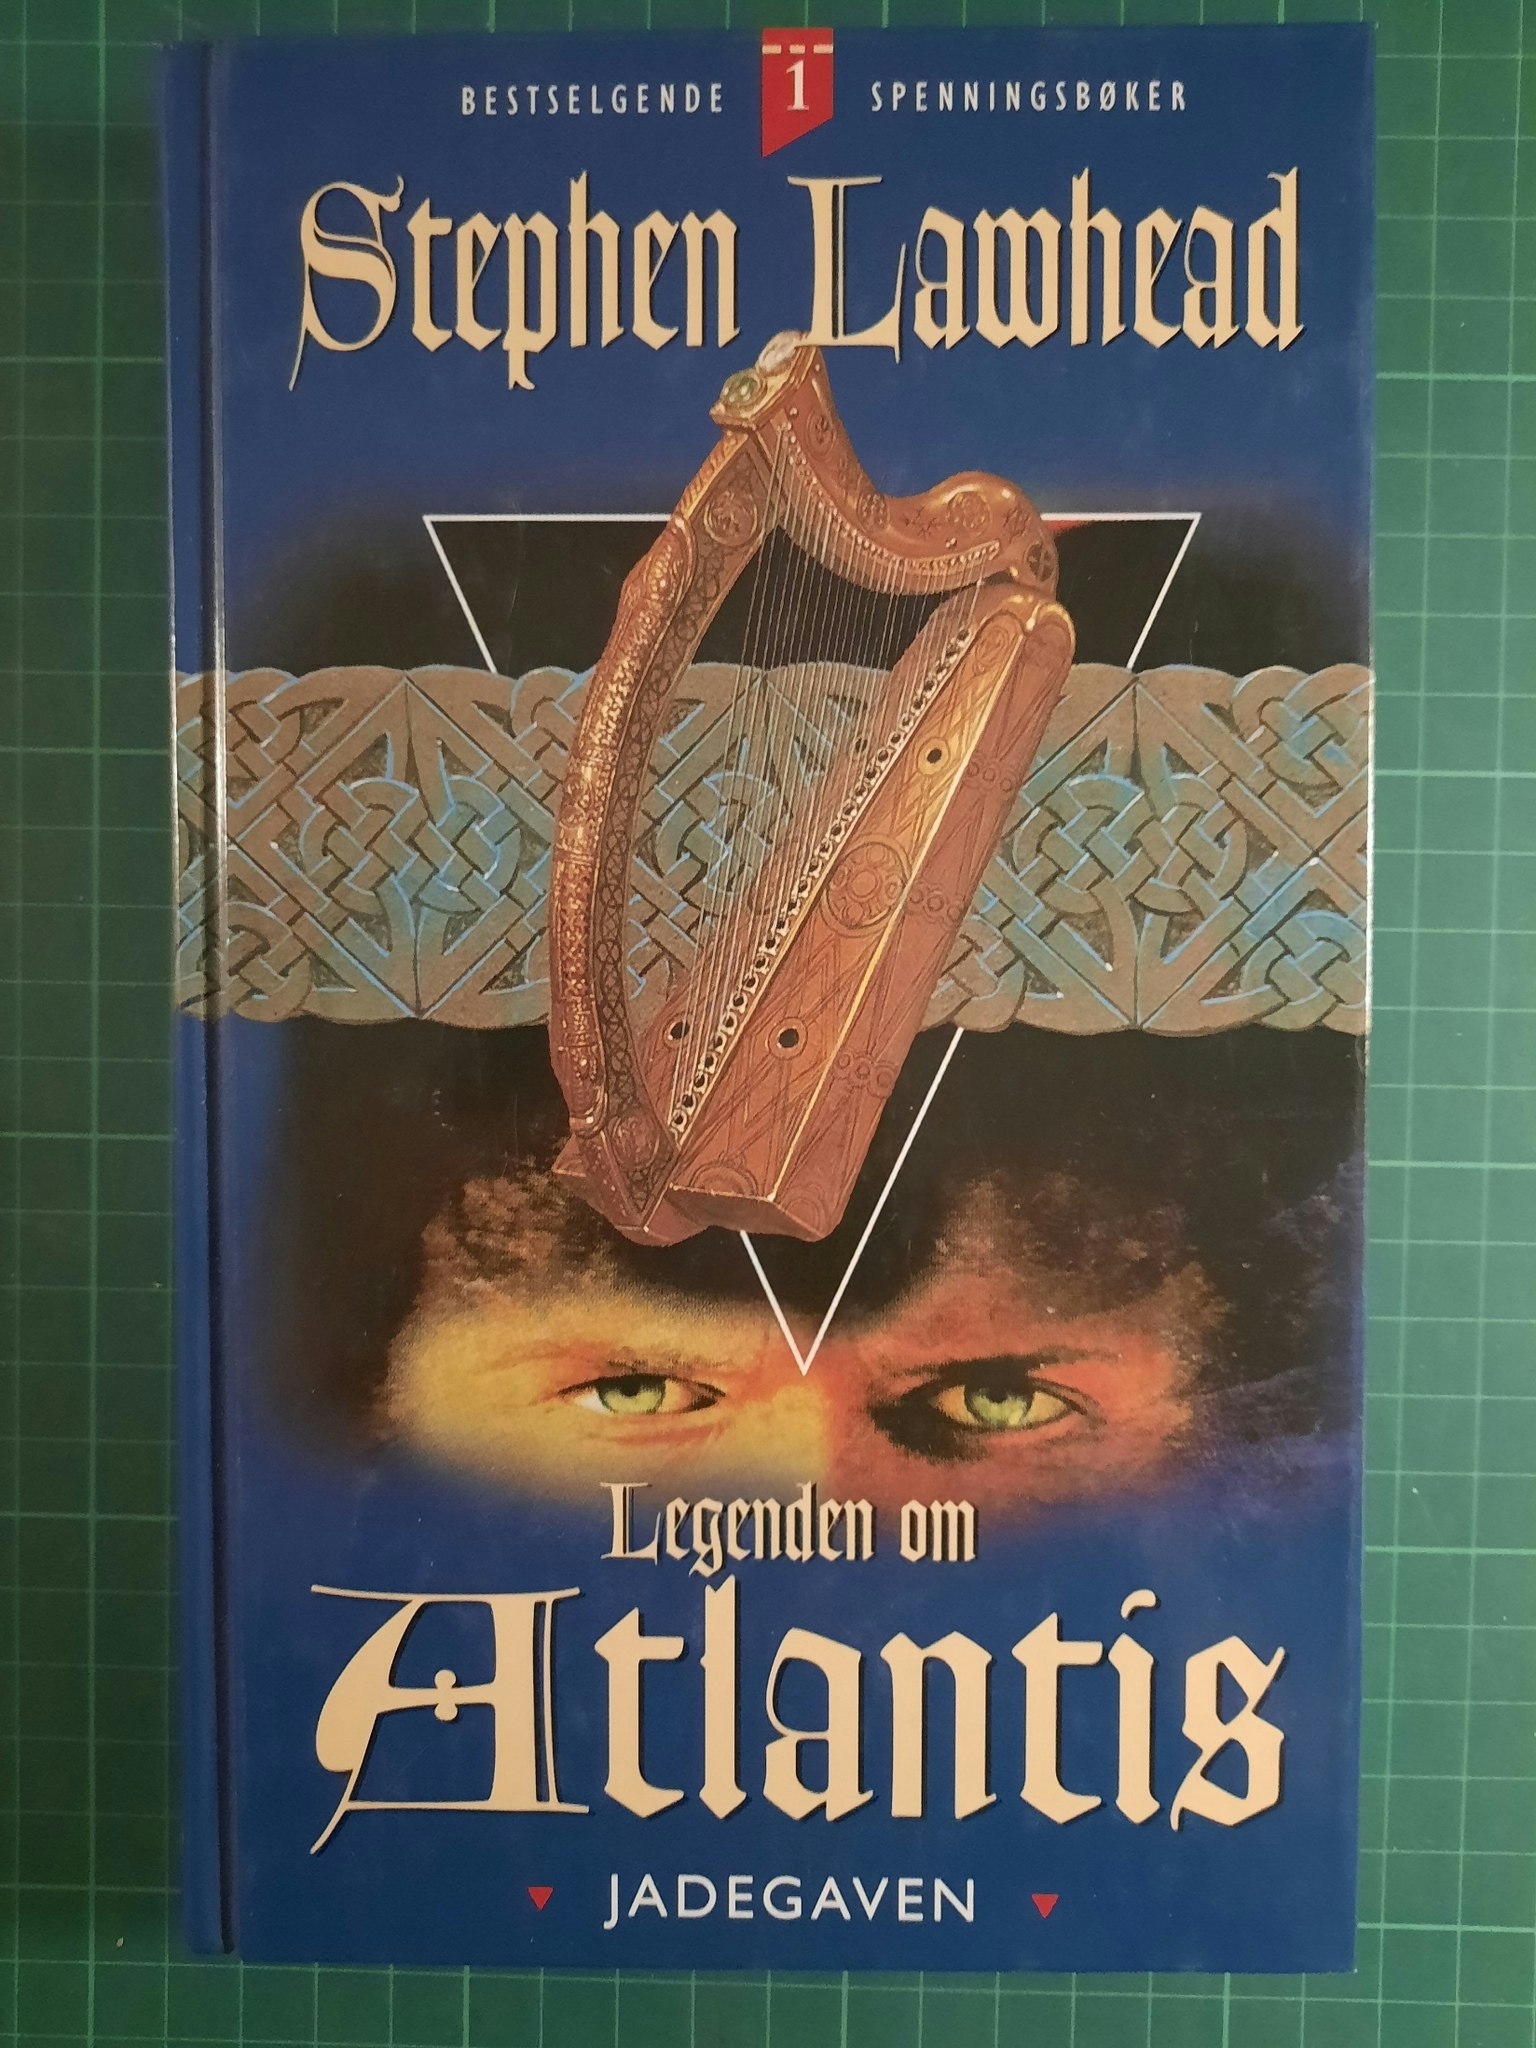 Legenden om Atlantis 1 : Jadegaven